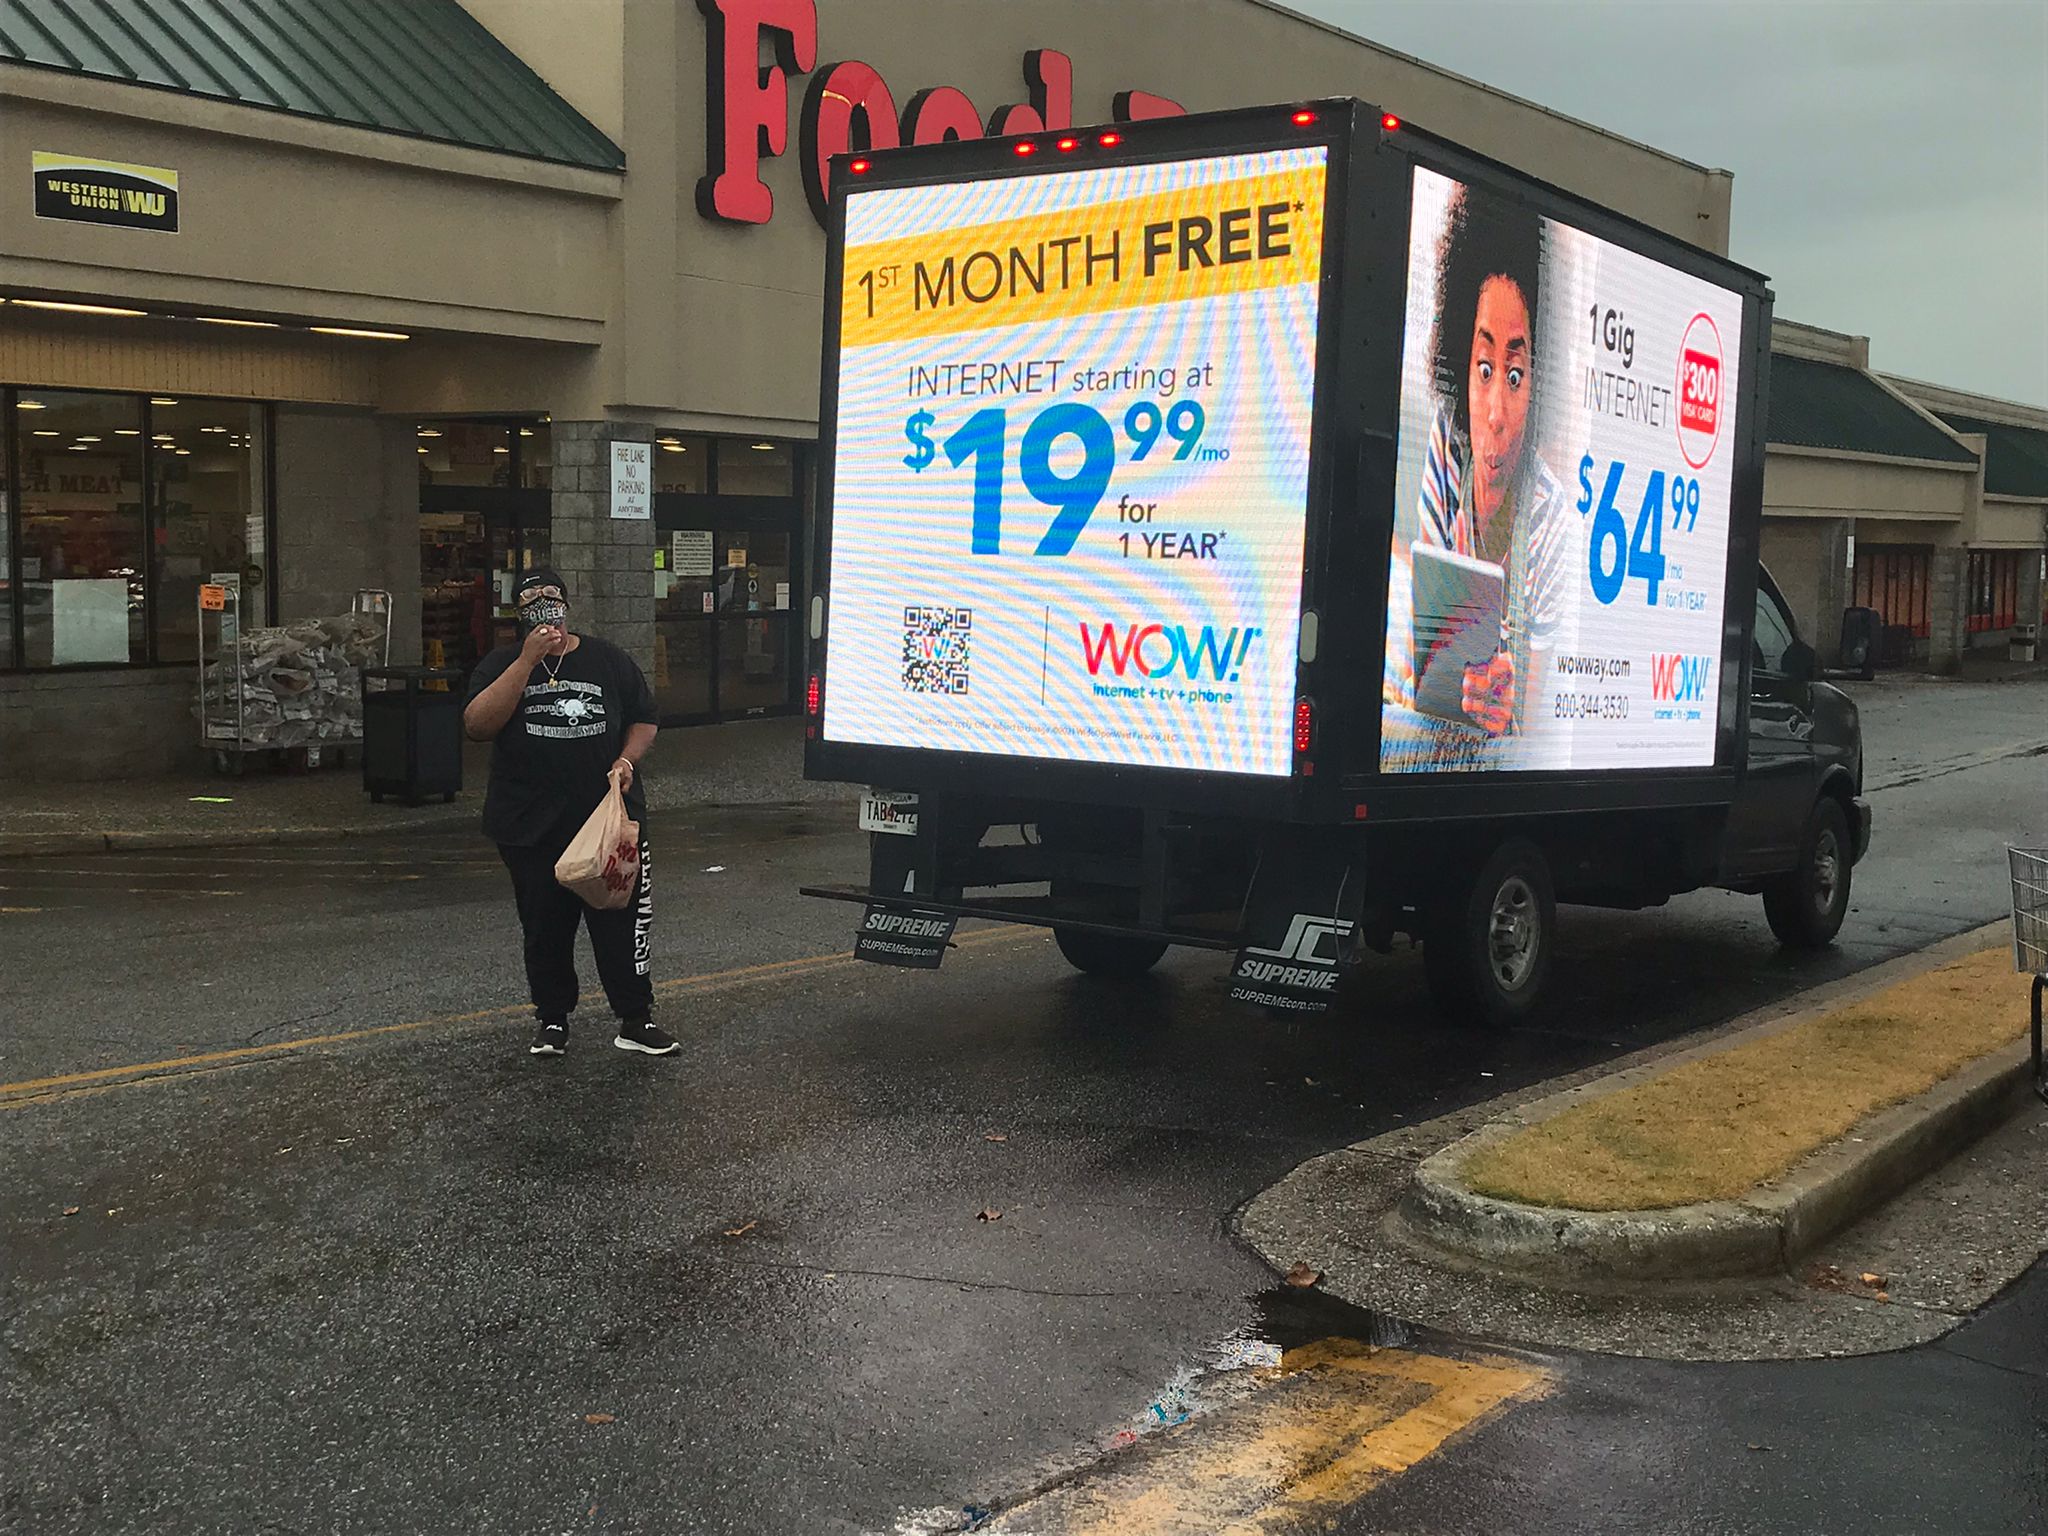 South Bend Elkhart Digital Mobile billboard Trucks (1)